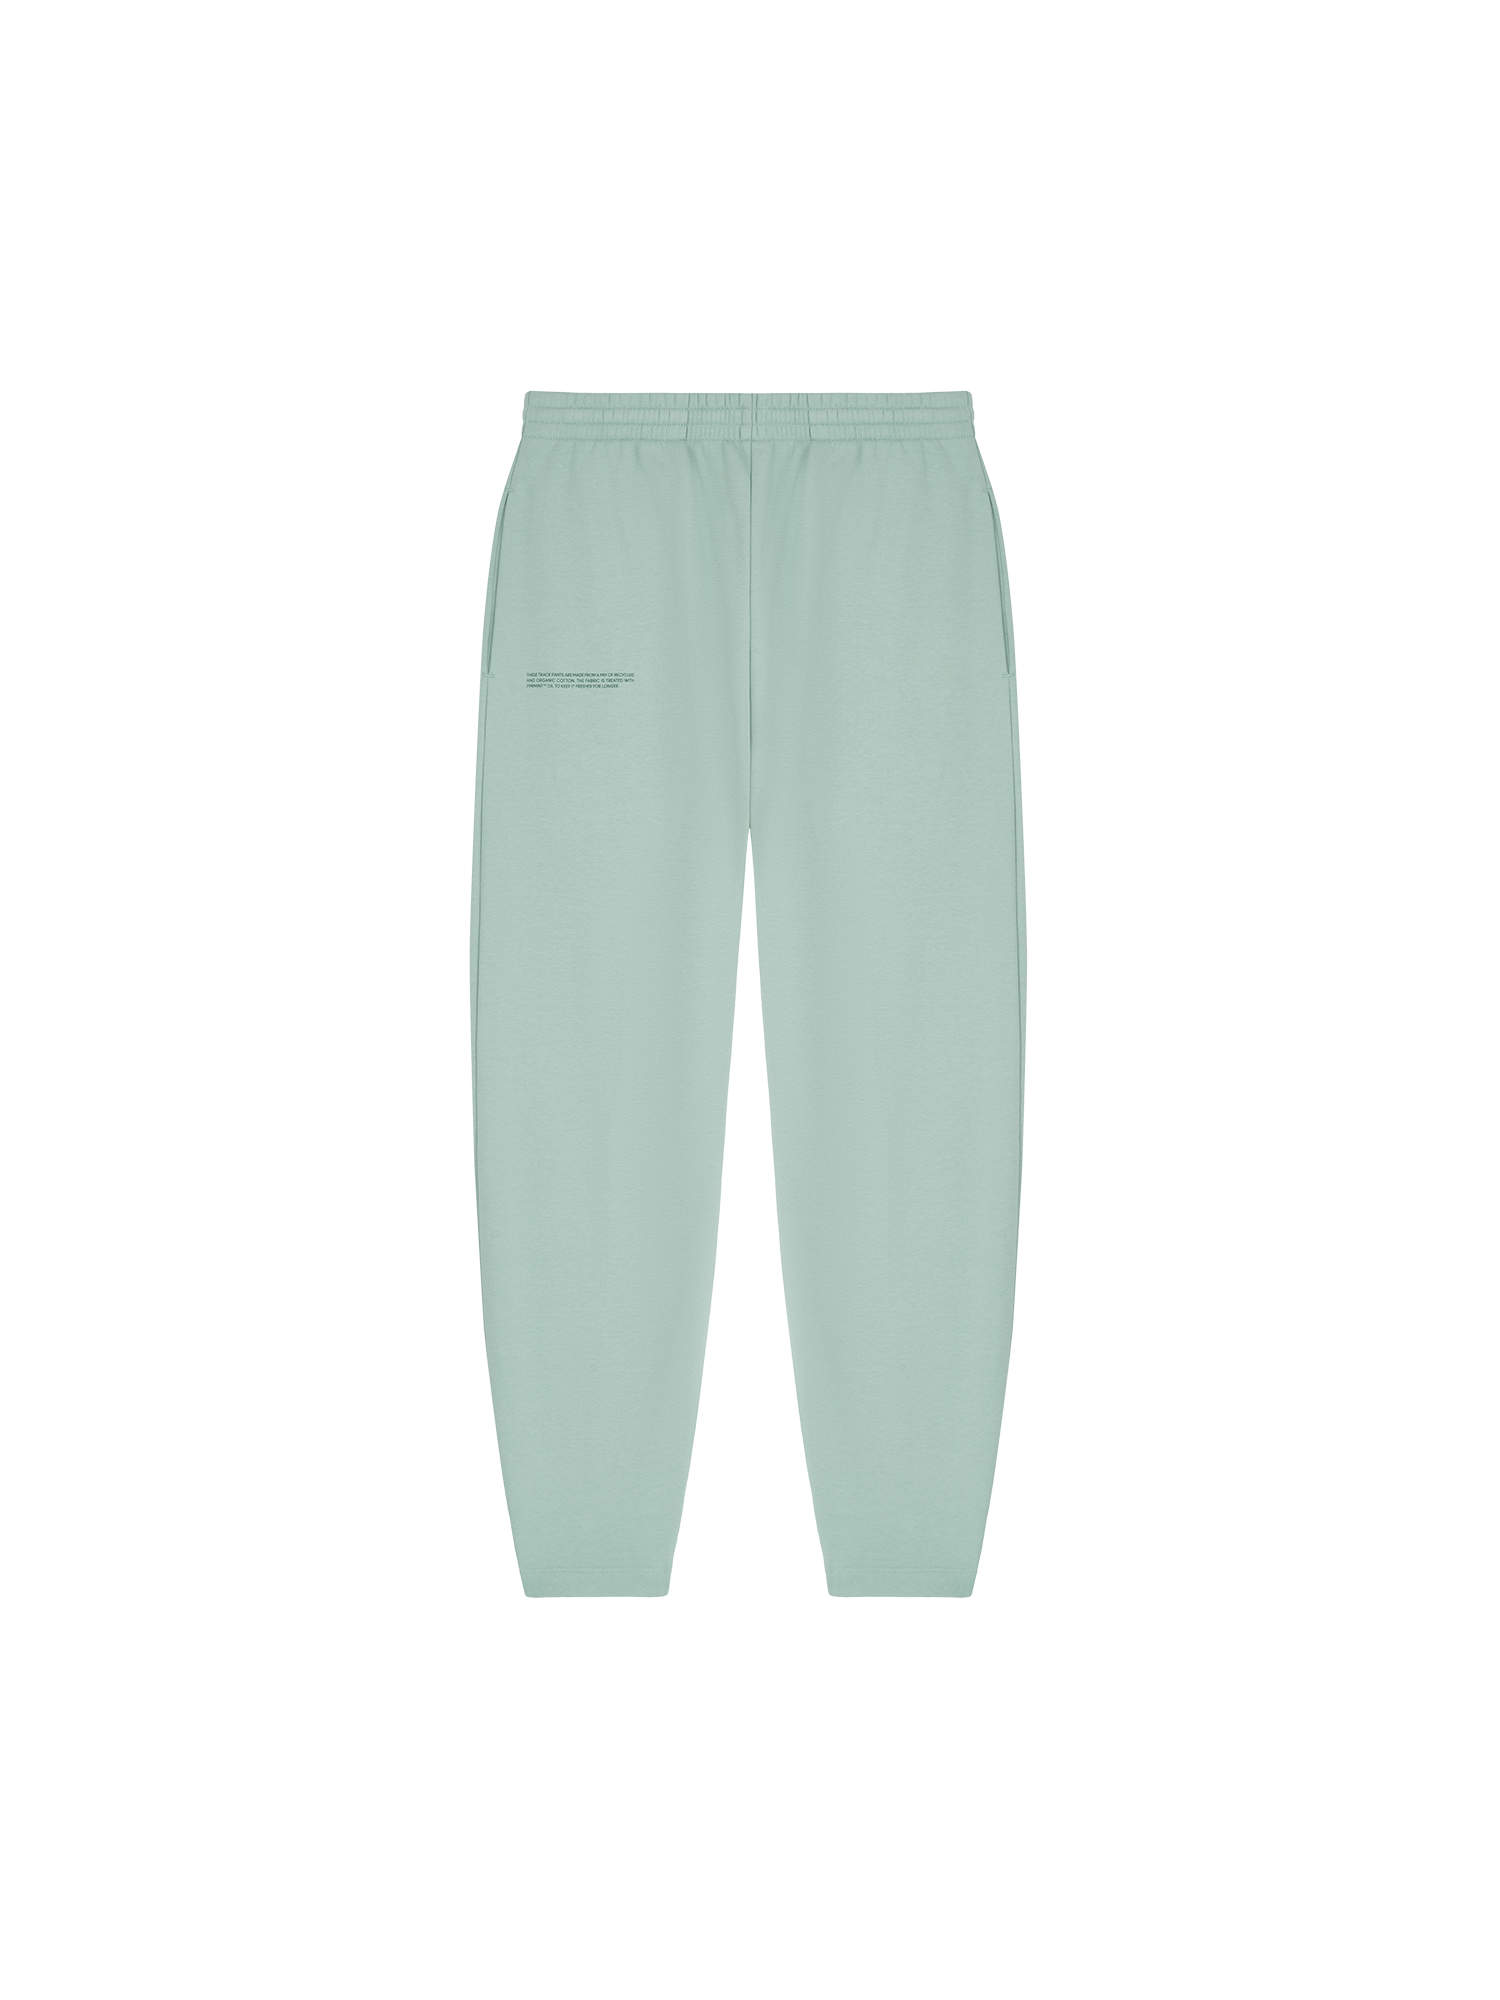 PANGAIA Blue Signature Track Pants Sweatpants Joggers Size XXS – RESPONSIBLE